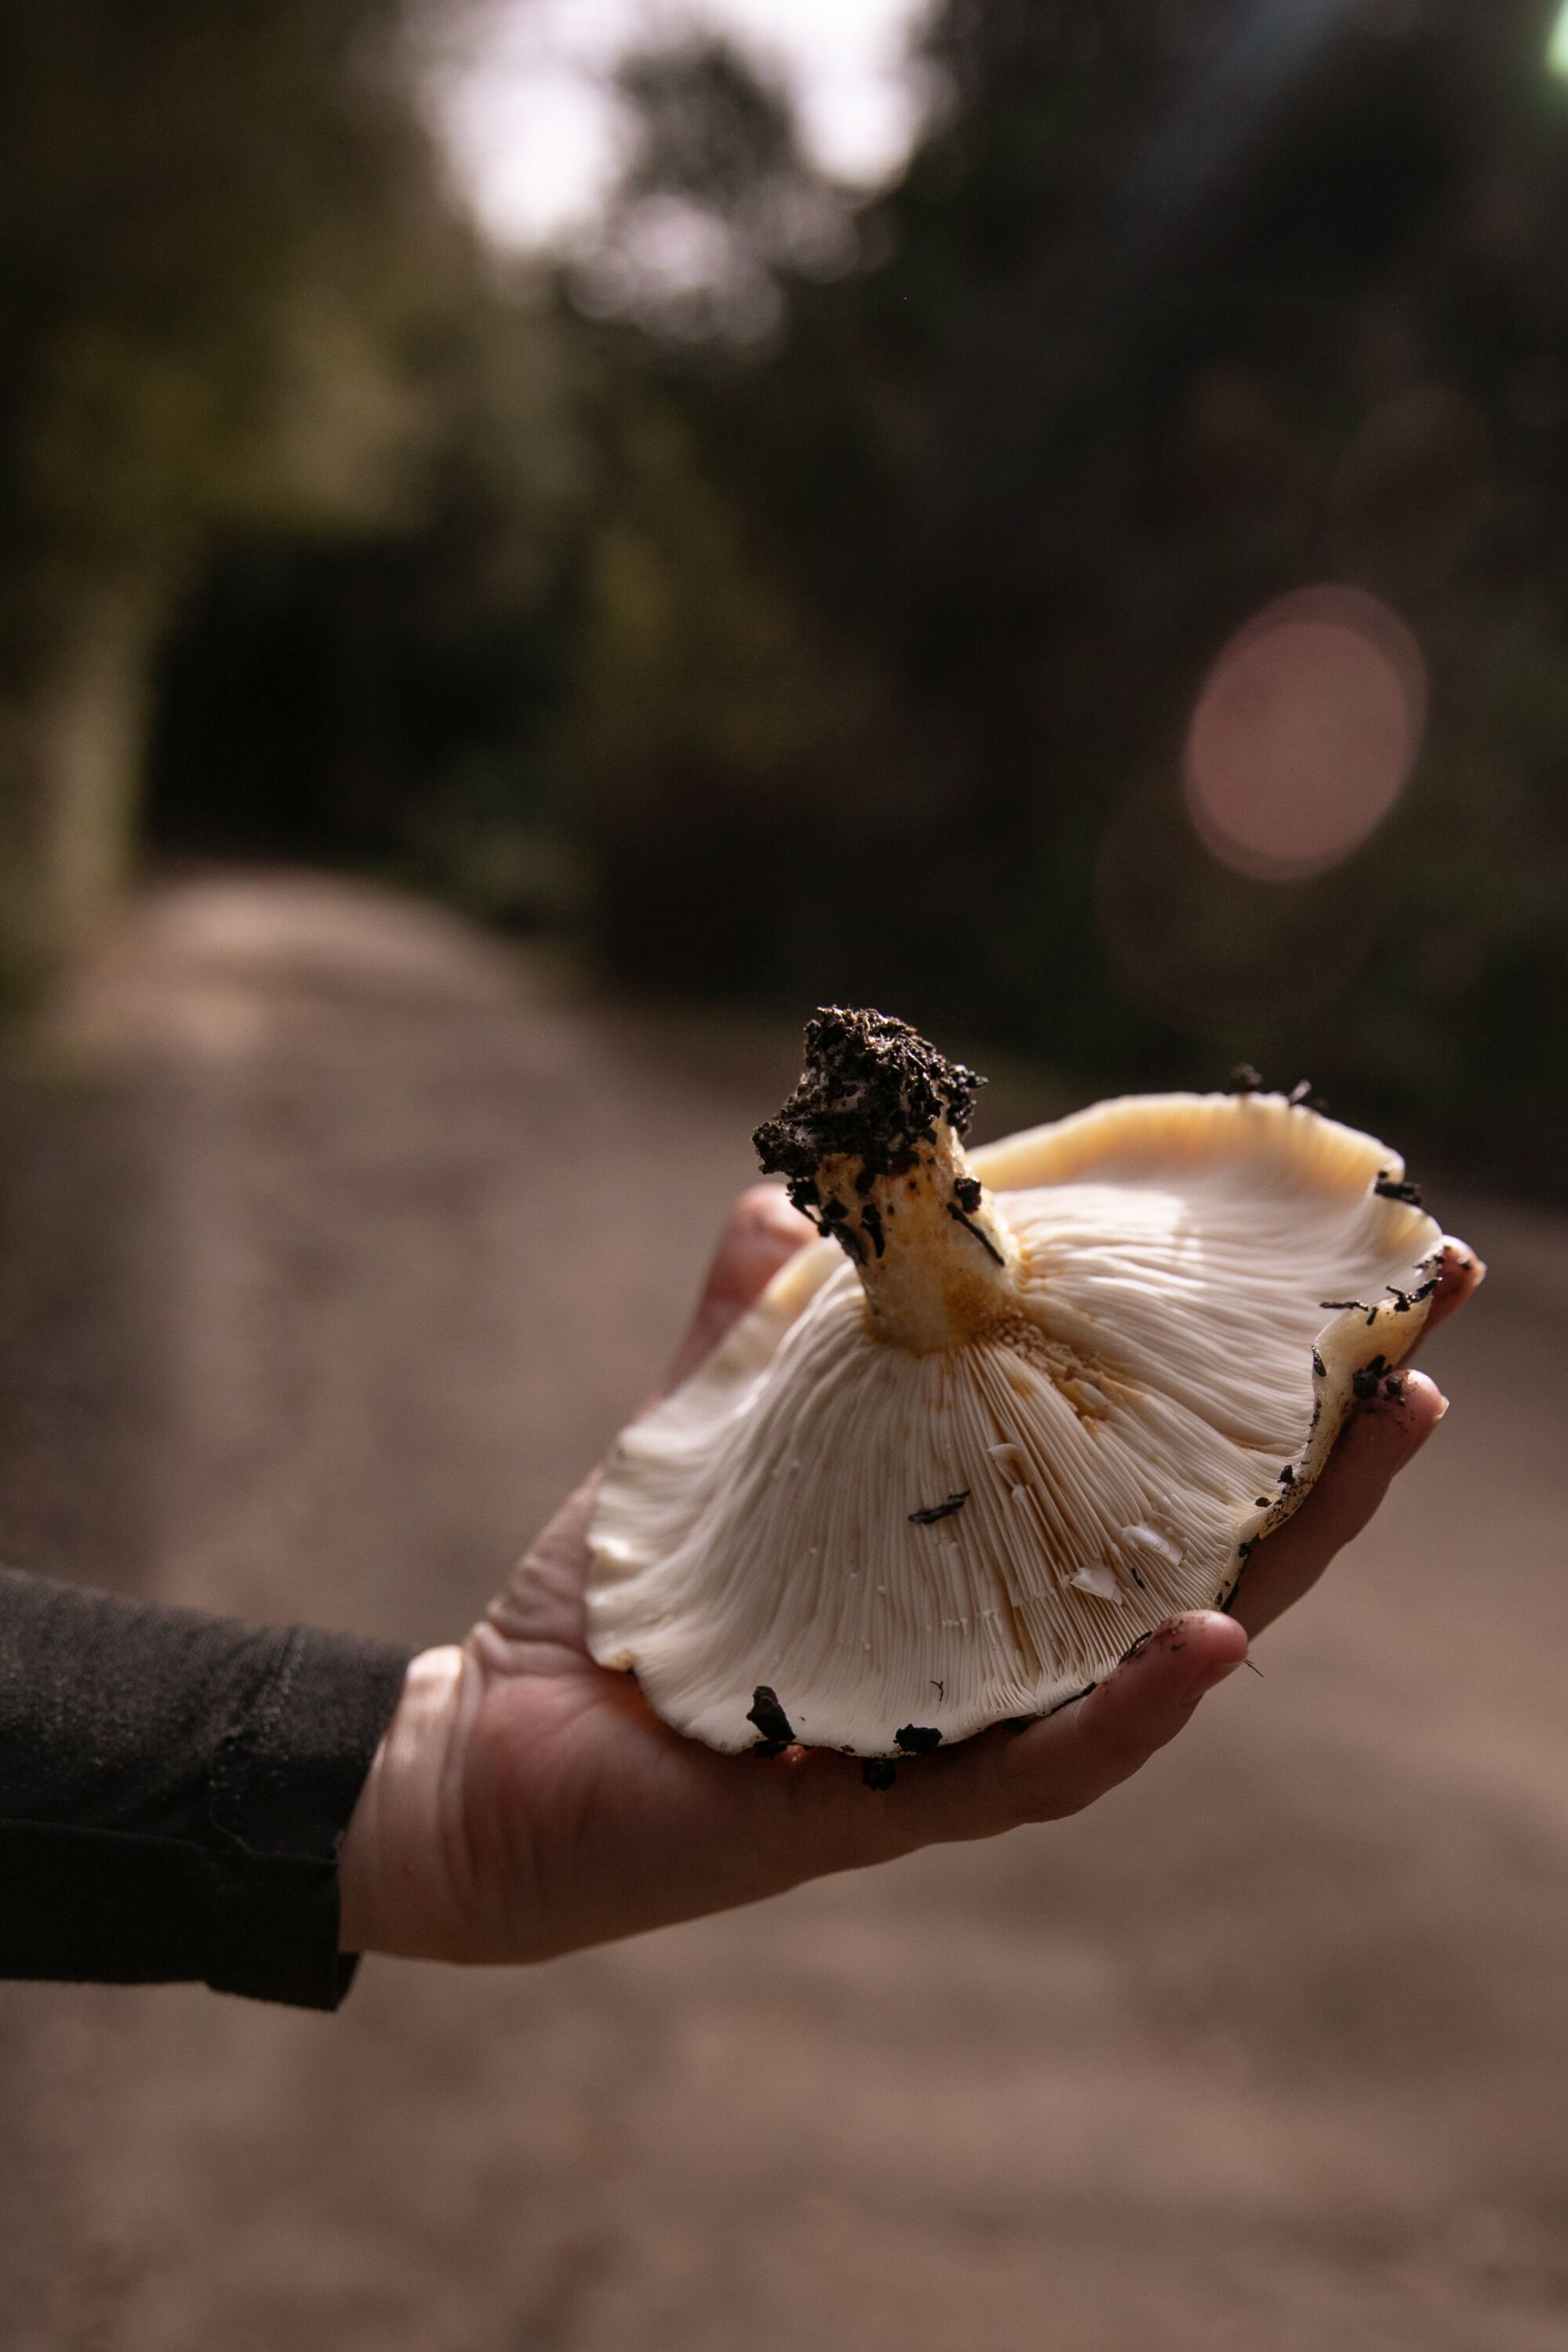 A hand holds a large mushroom upside down.